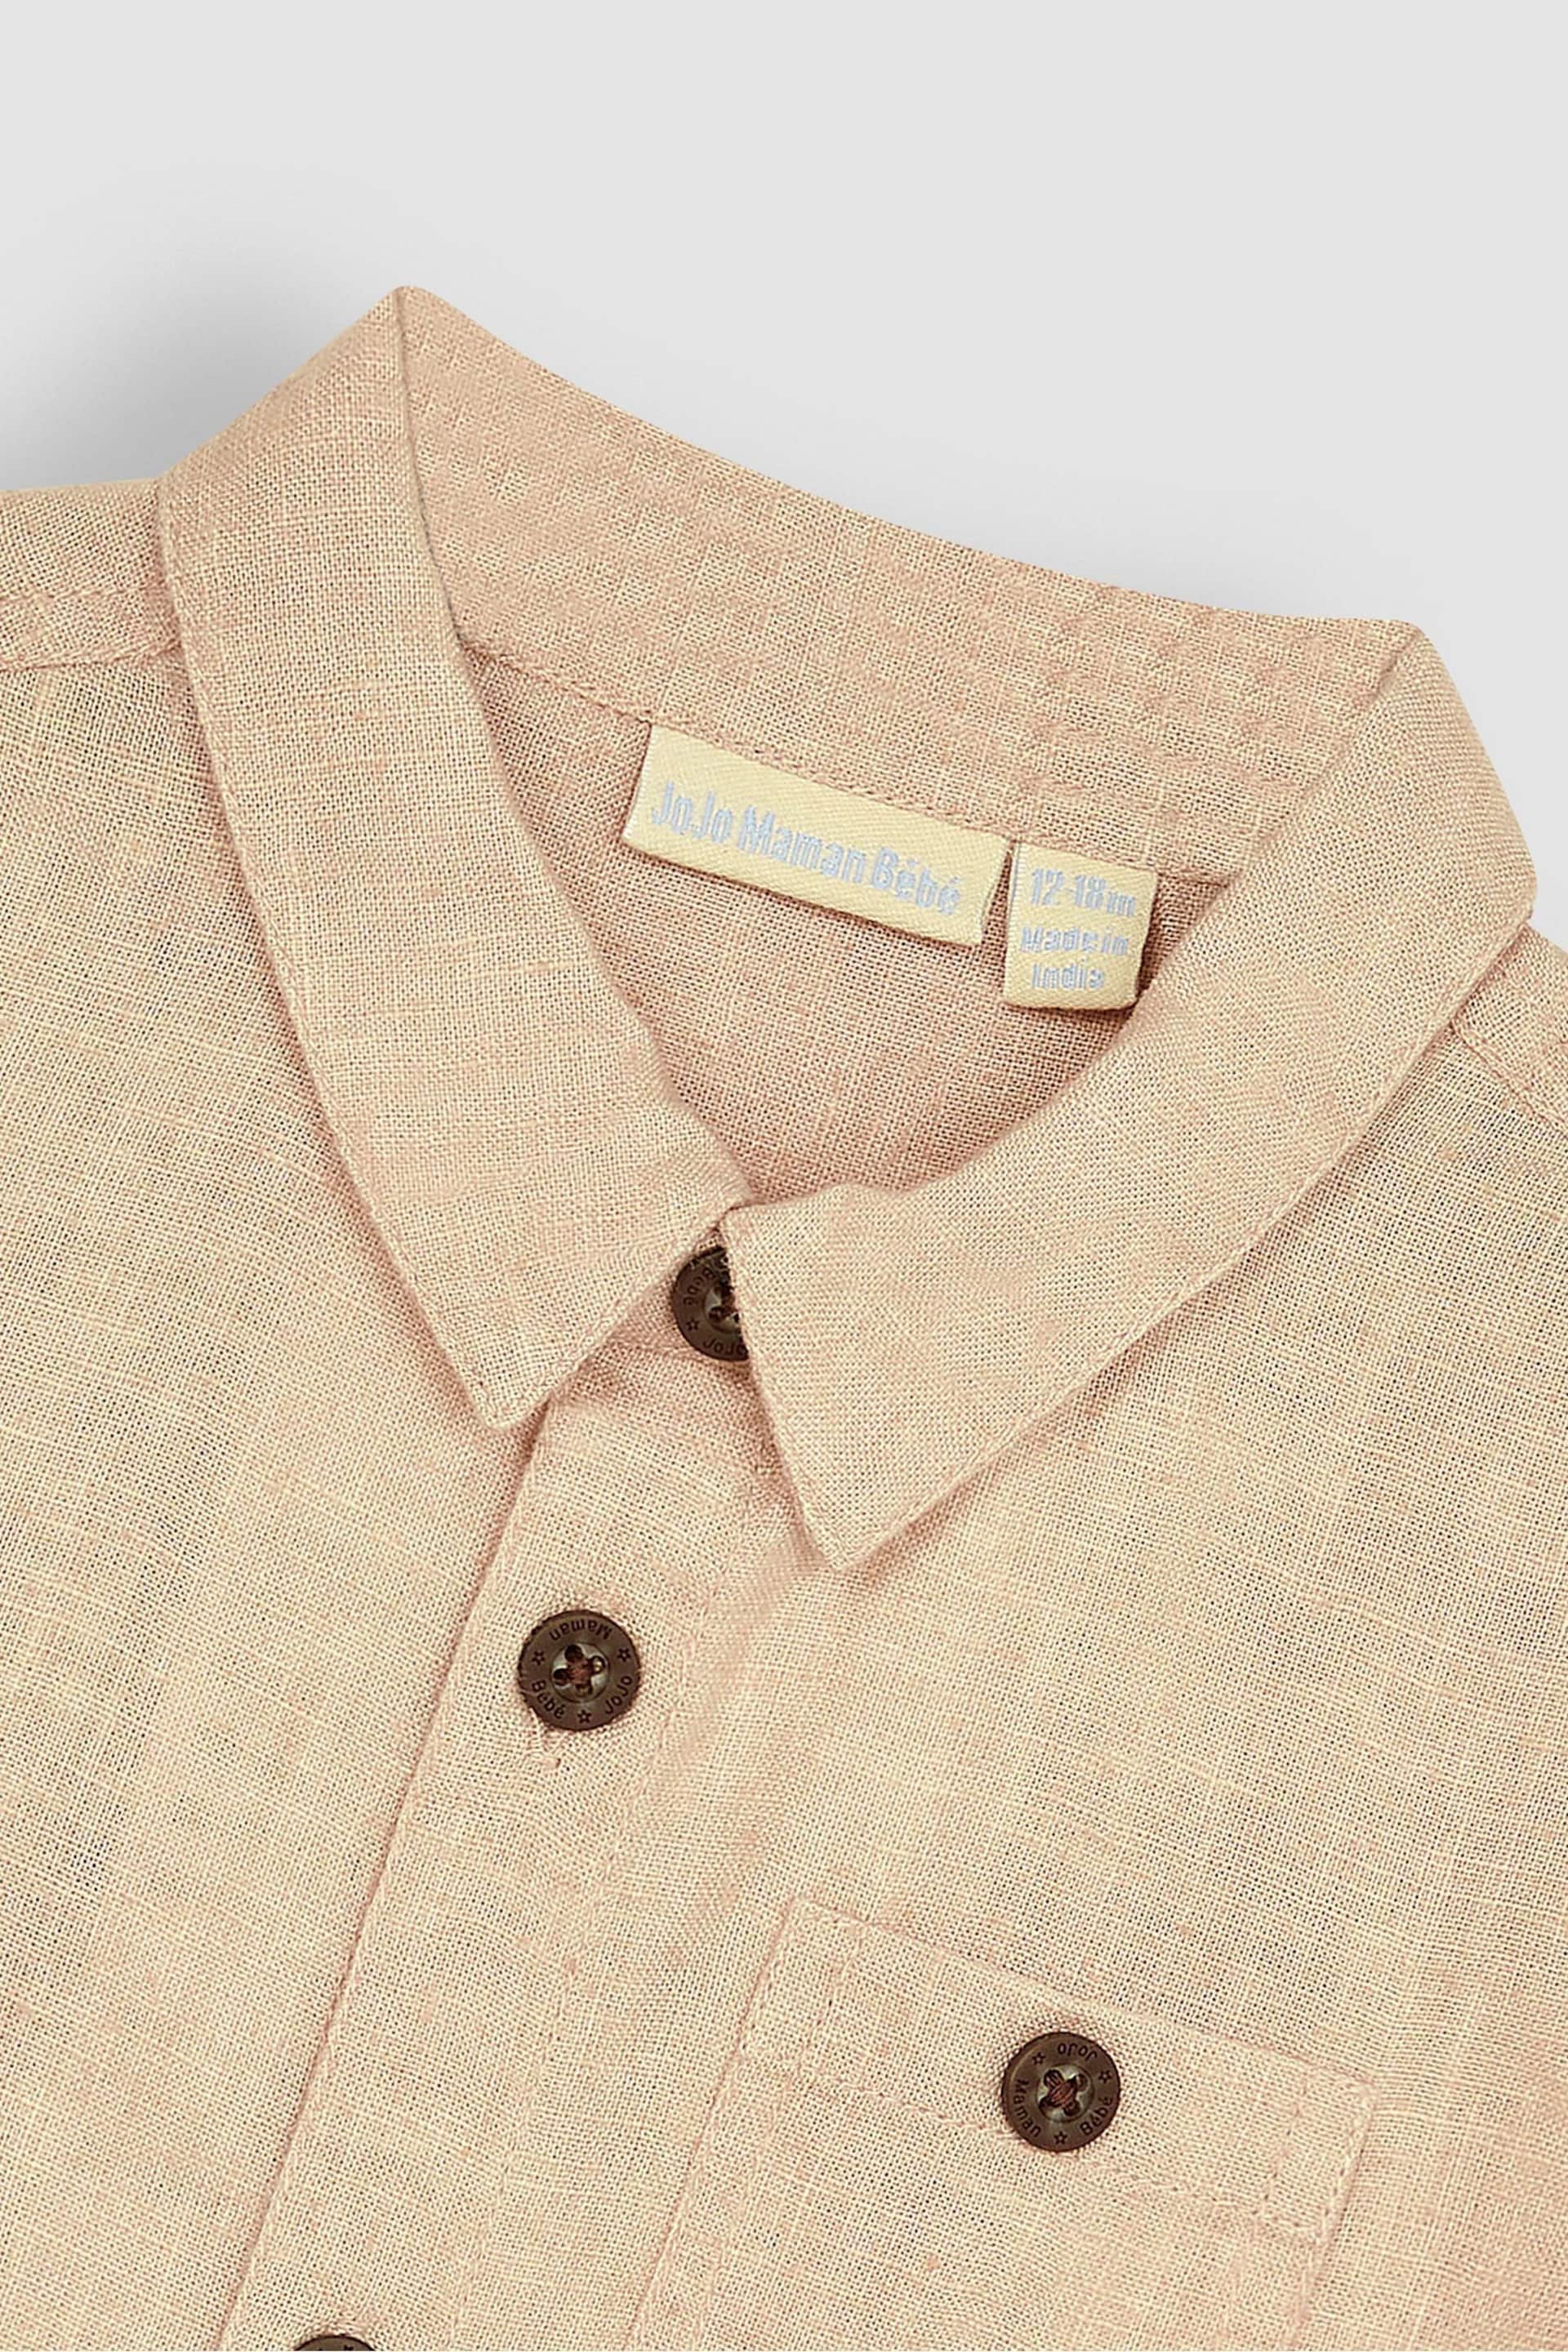 JoJo Maman Bébé Stone Classic Cotton Linen Summer Short Sleeve Shirt - Image 2 of 3